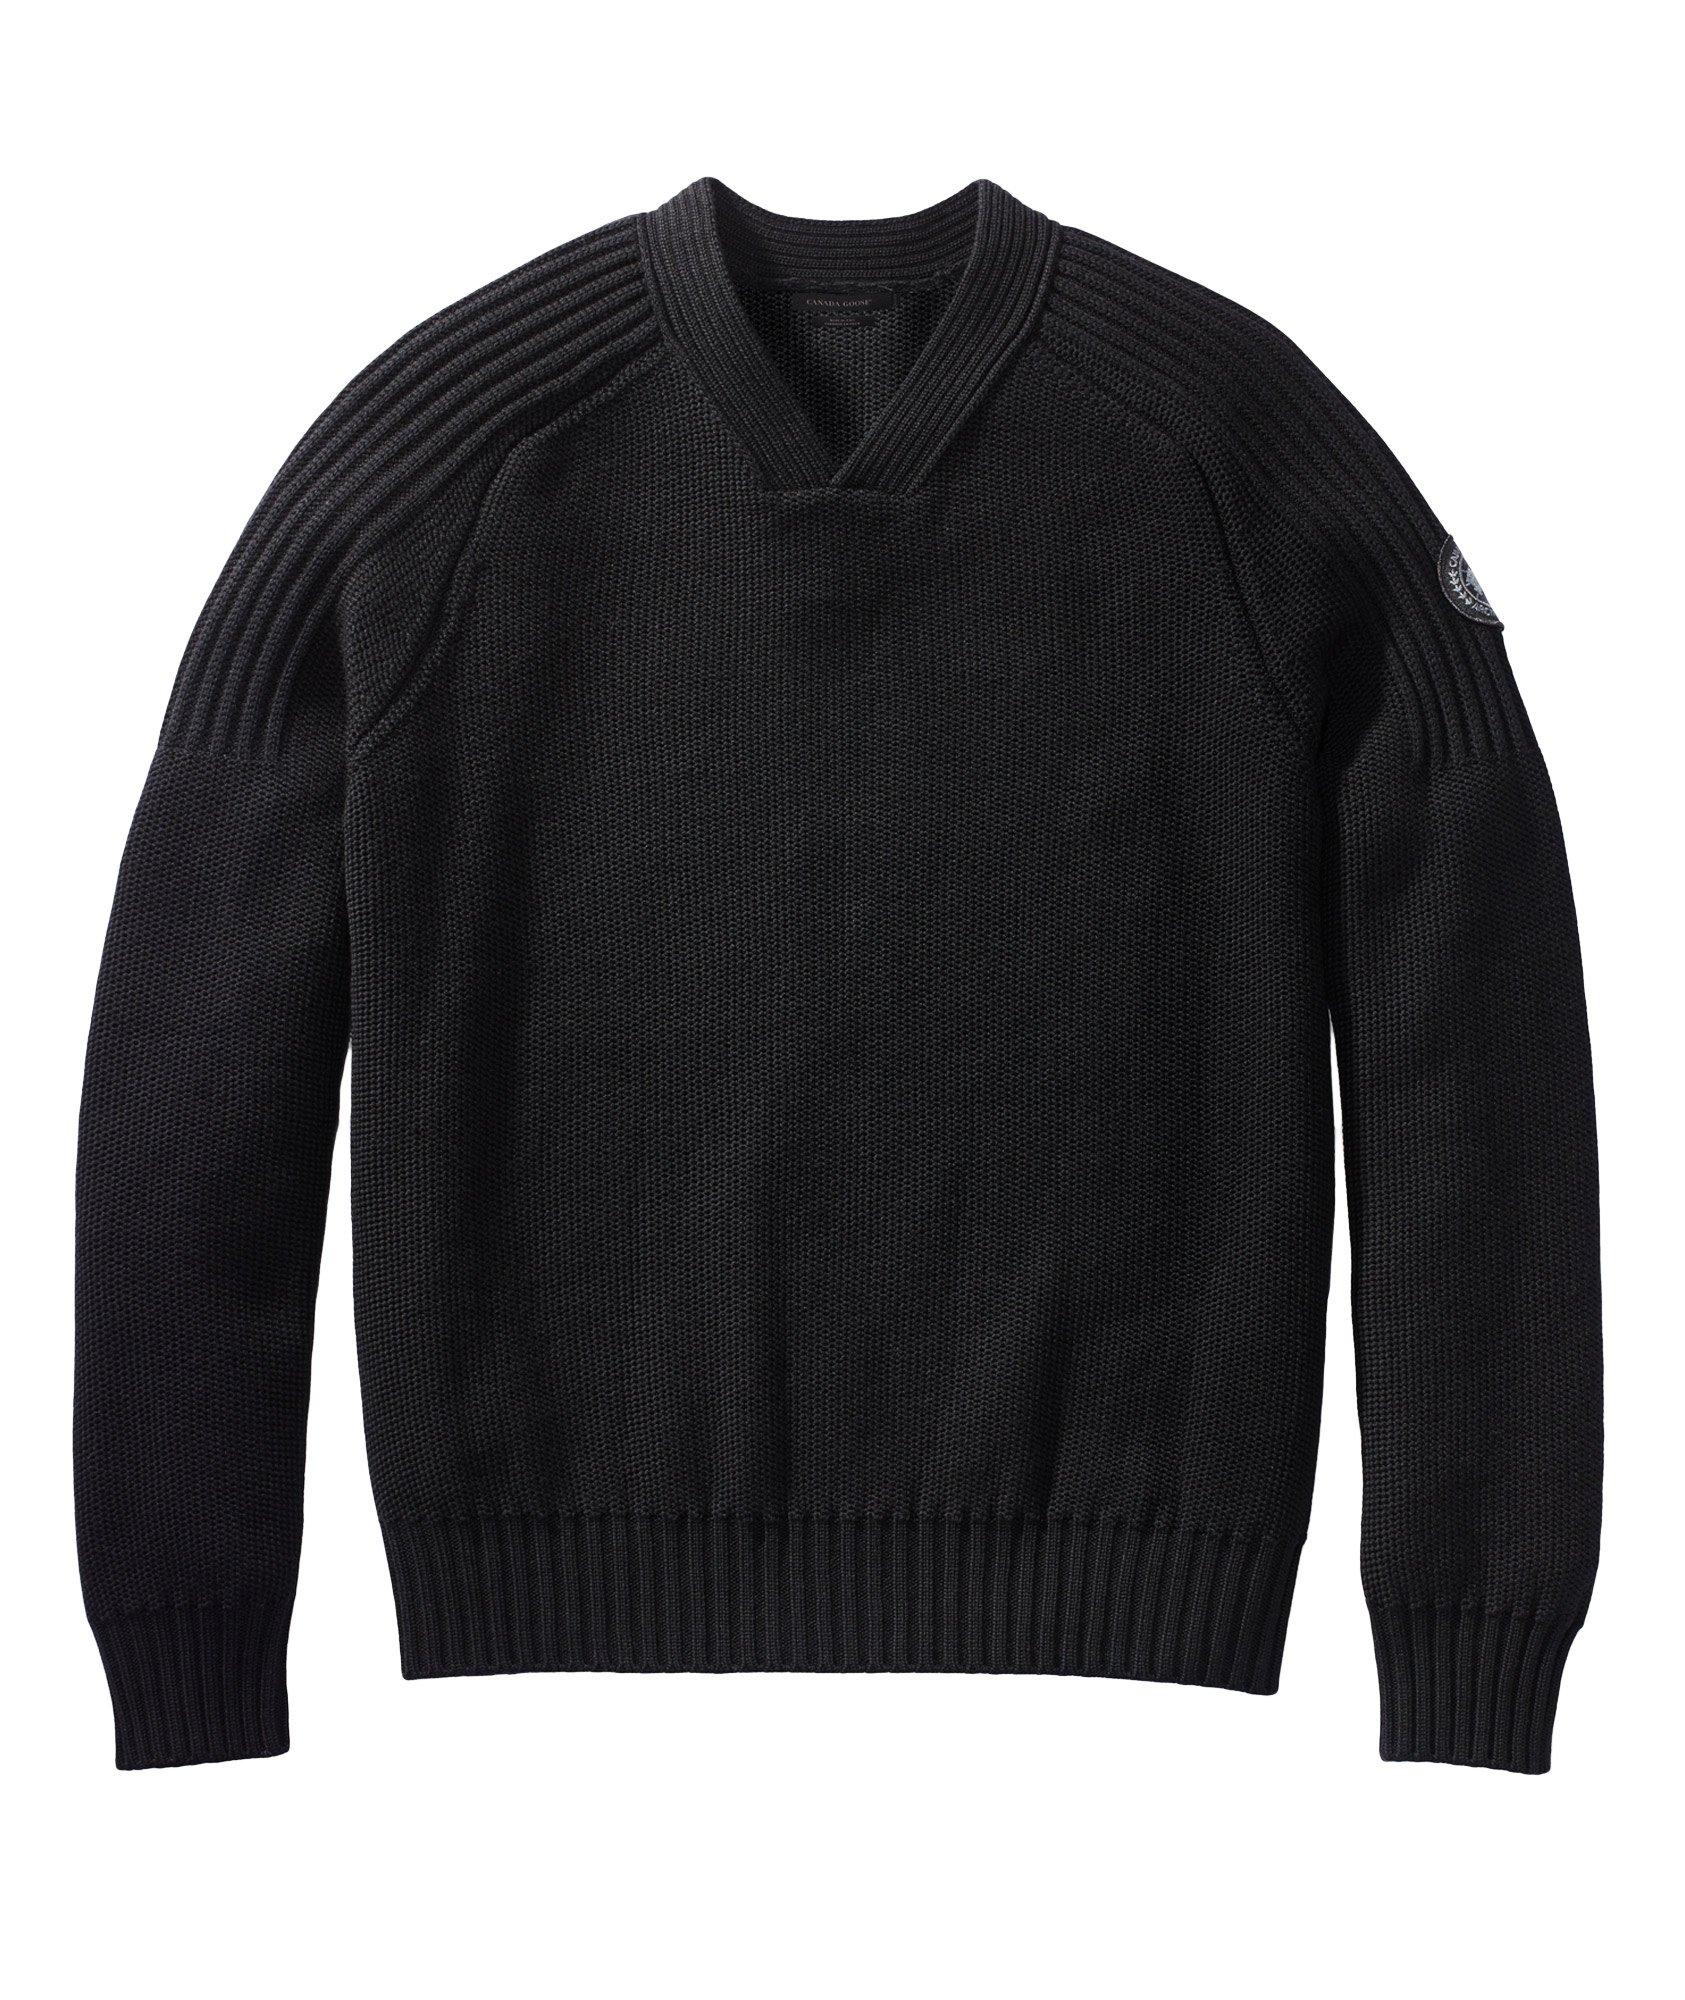 Pull en tricot, modèle Valemount image 0